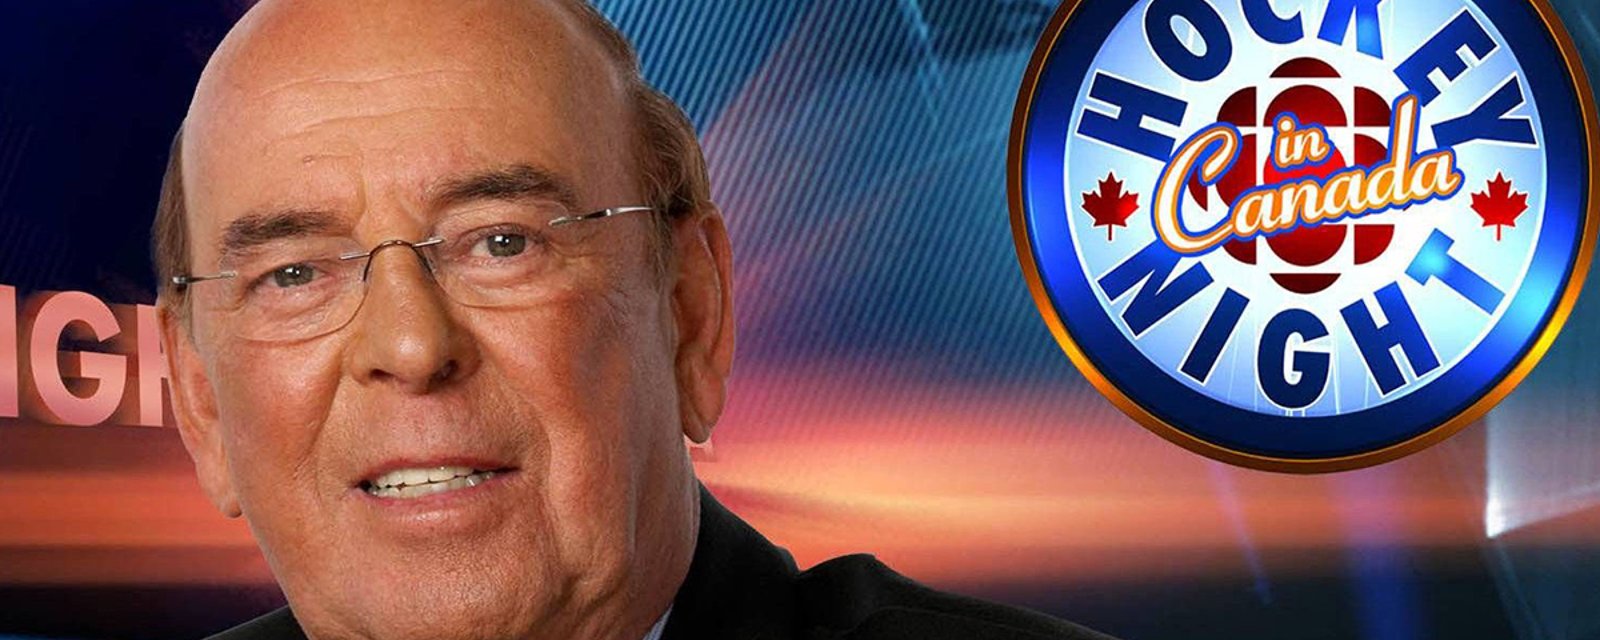 CBC announces final game for legendary broadcaster Bob Cole